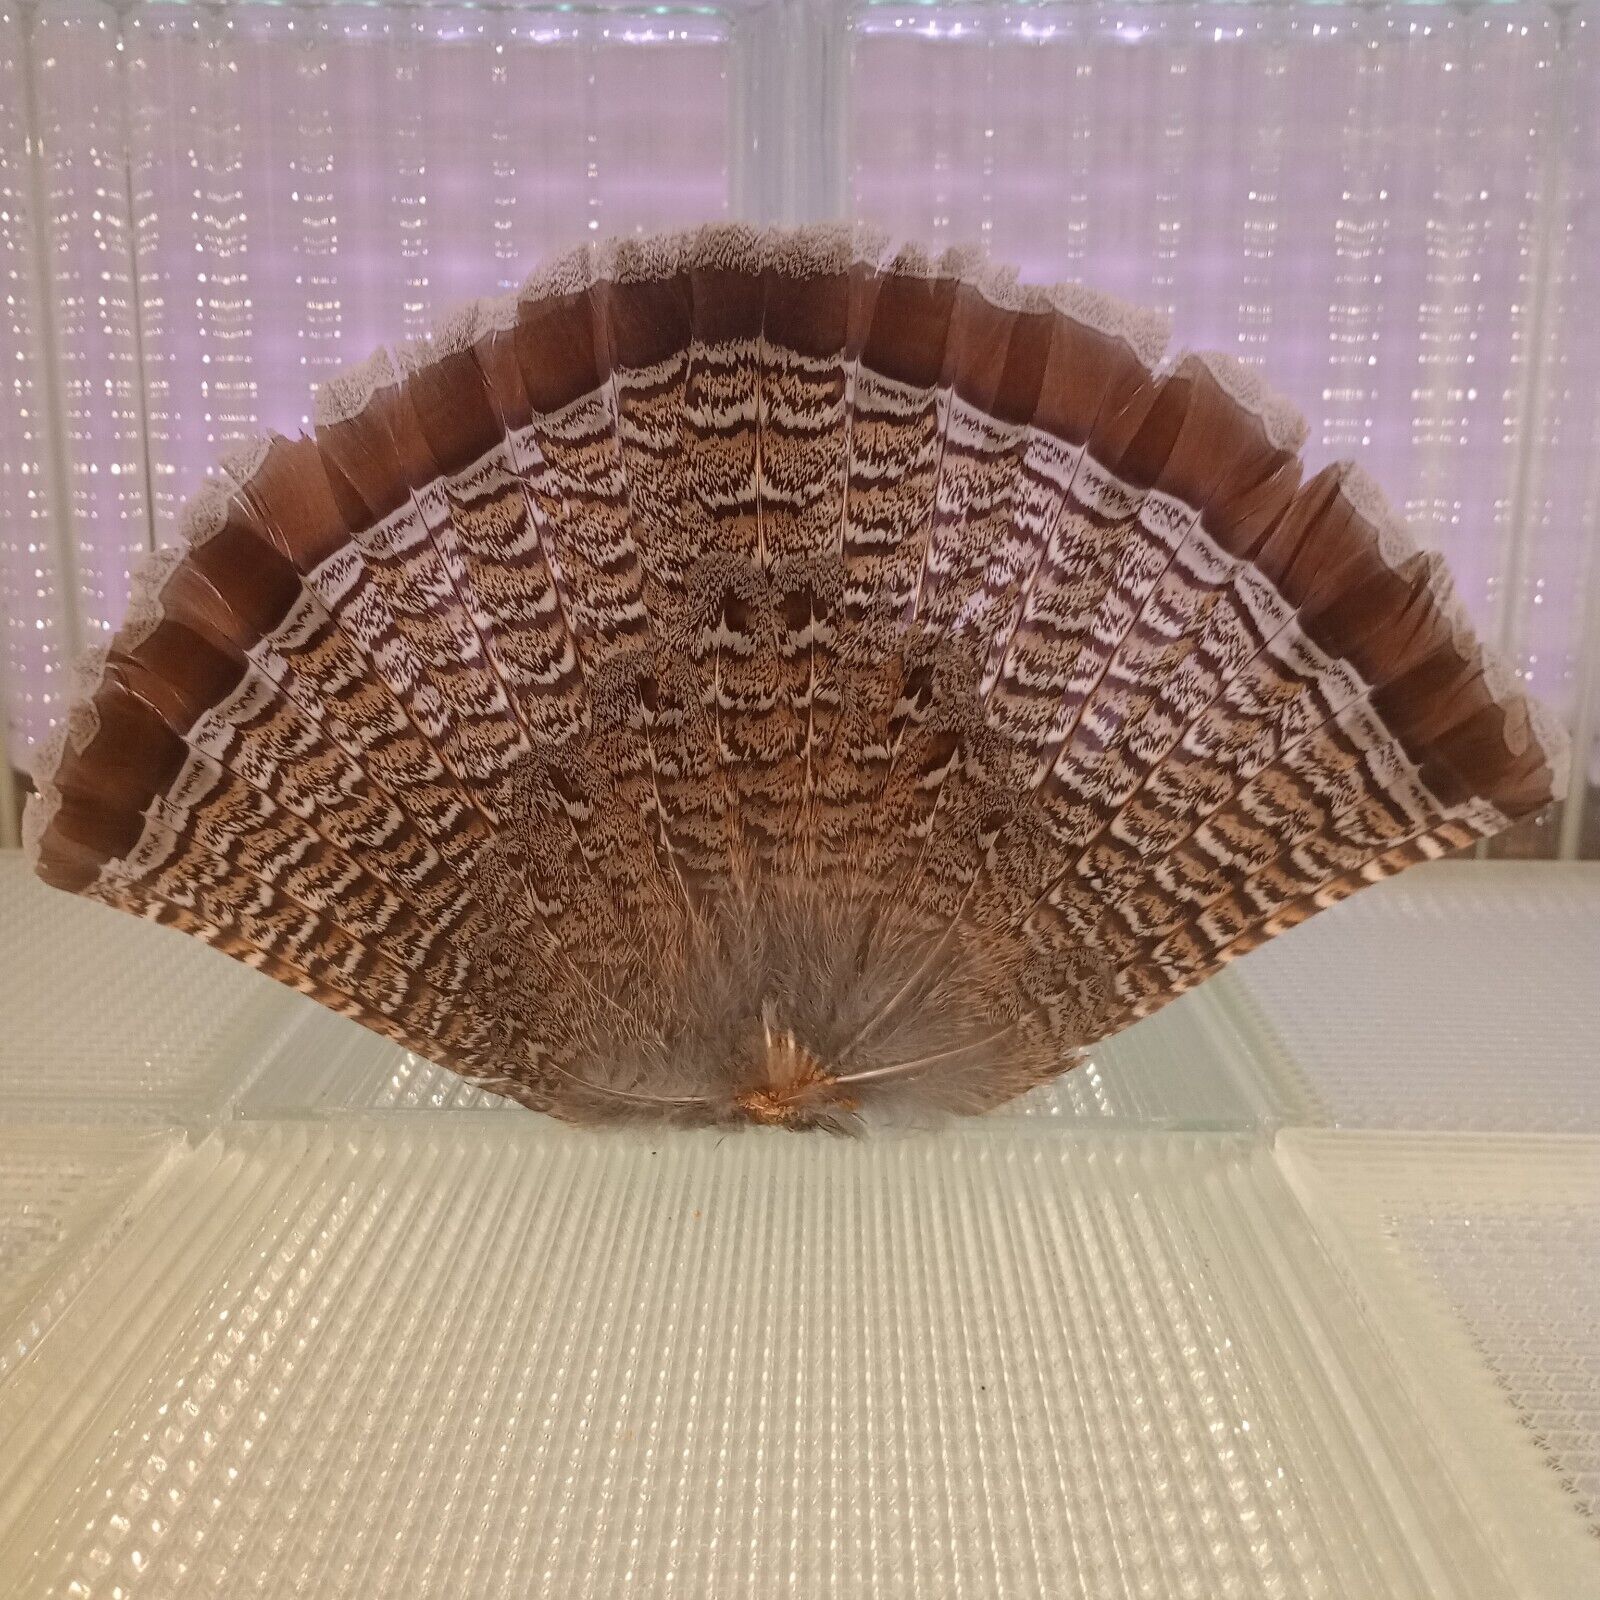 Mature Minnesota Ruffed Grouse Feathers - Tail Fan - Cinnamon Color Phase - Rare